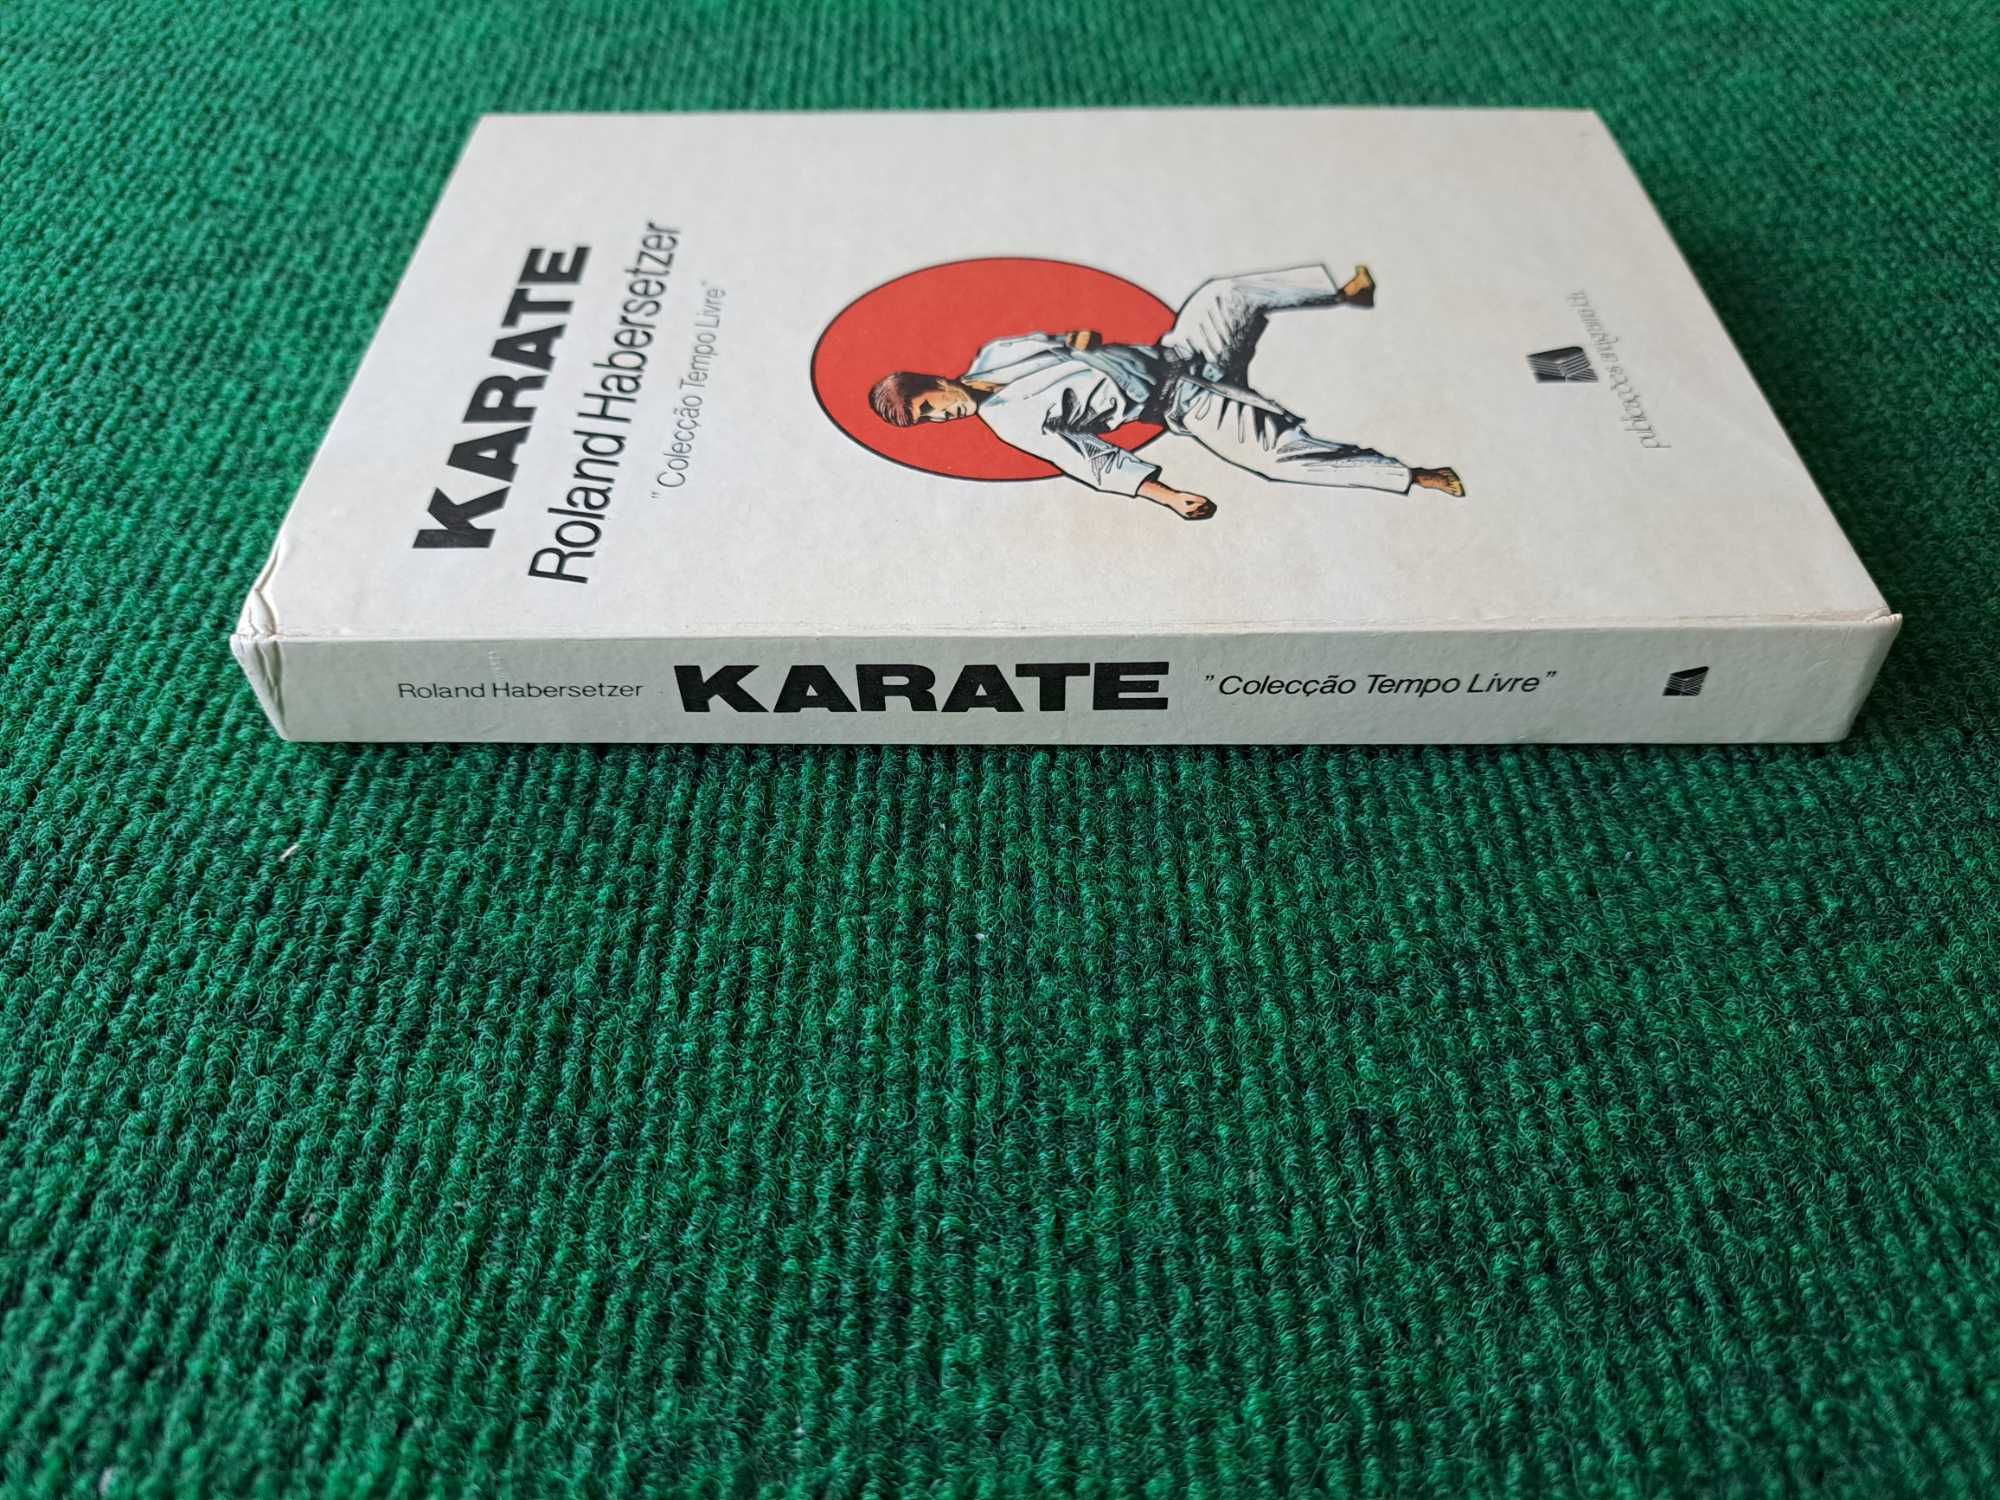 O Karate (Técnica Wado-Ryu)